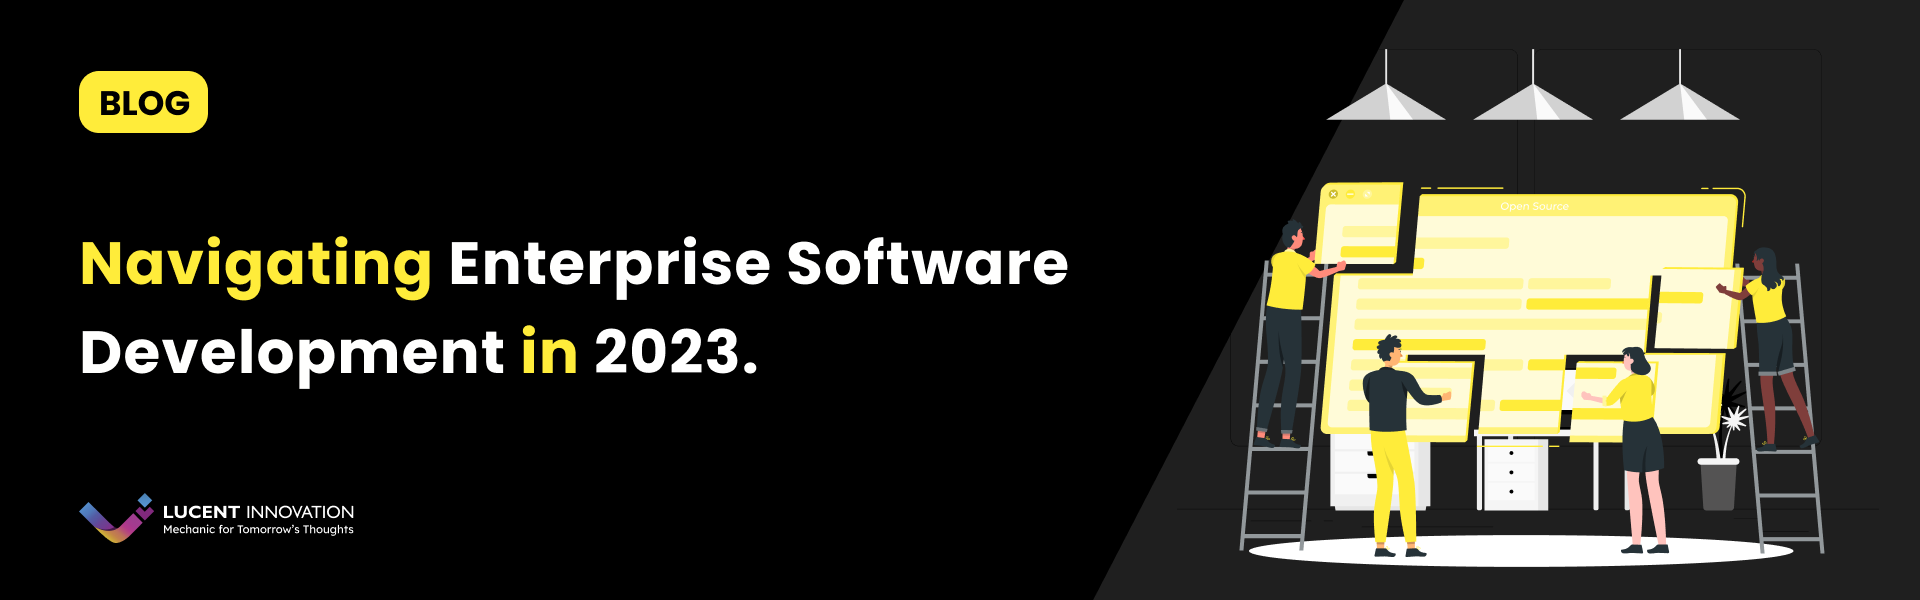 Navigating Enterprise Software Development in 2023